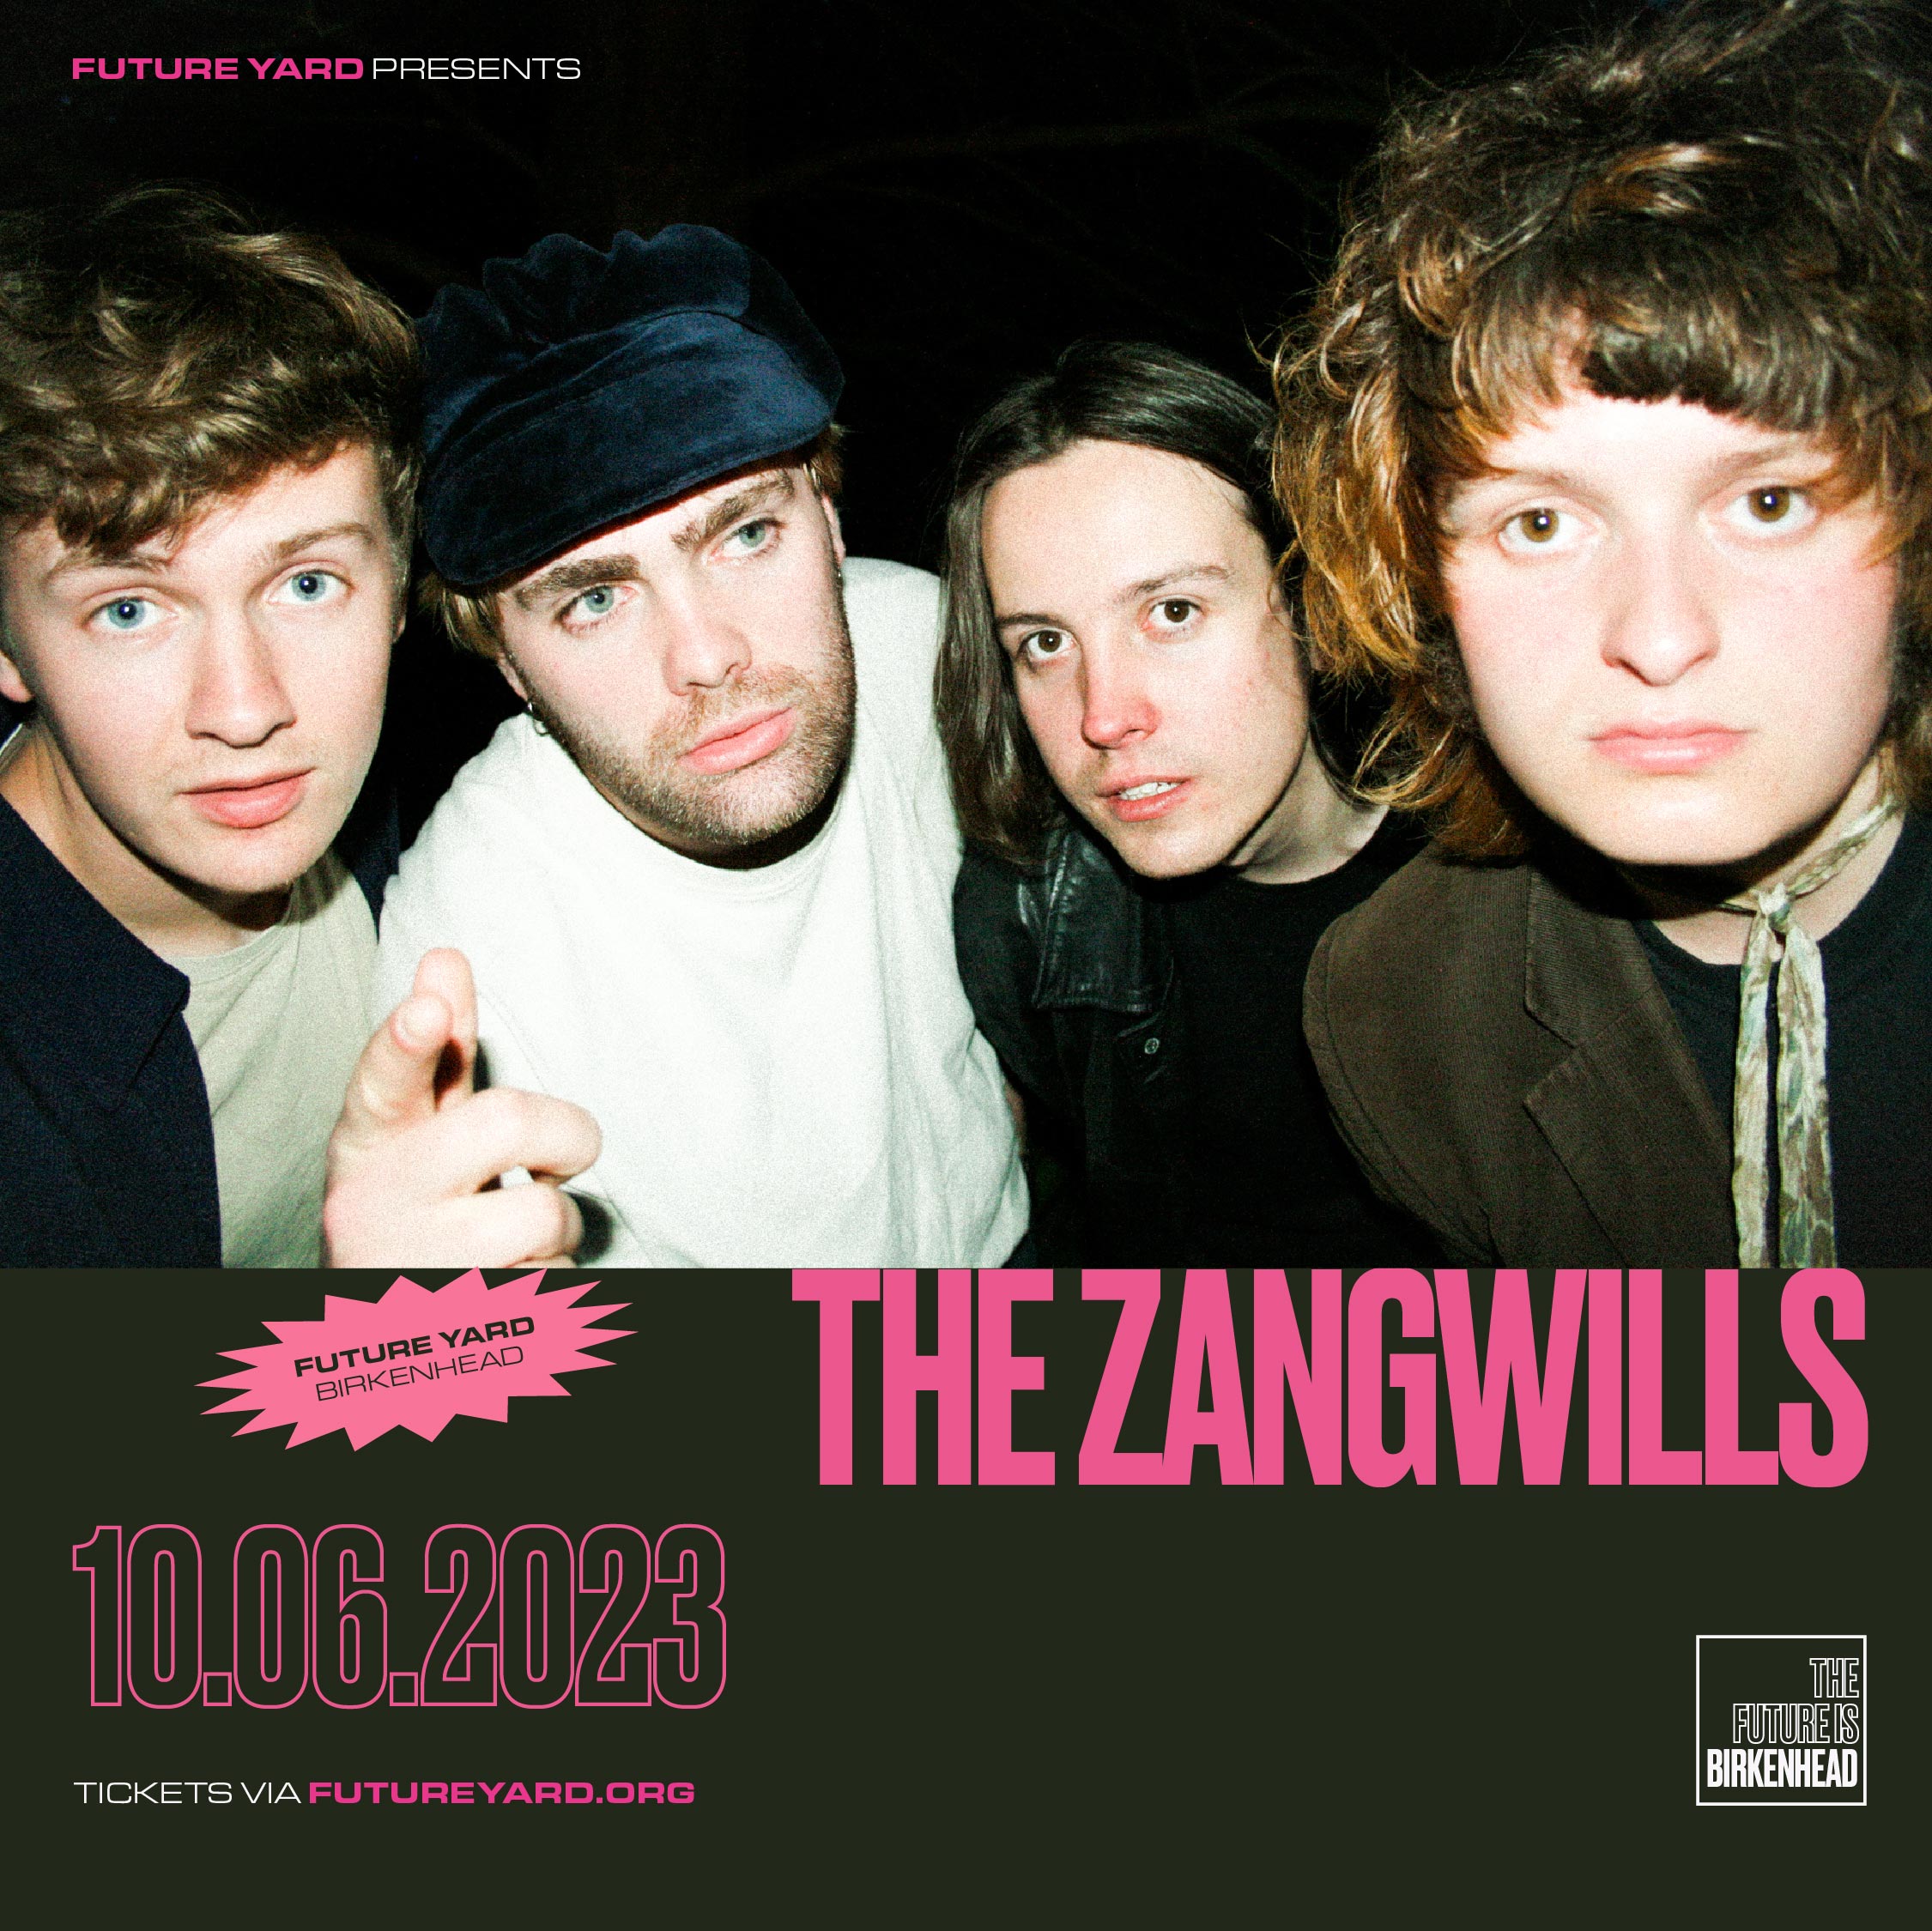 THE ZANGWILLS